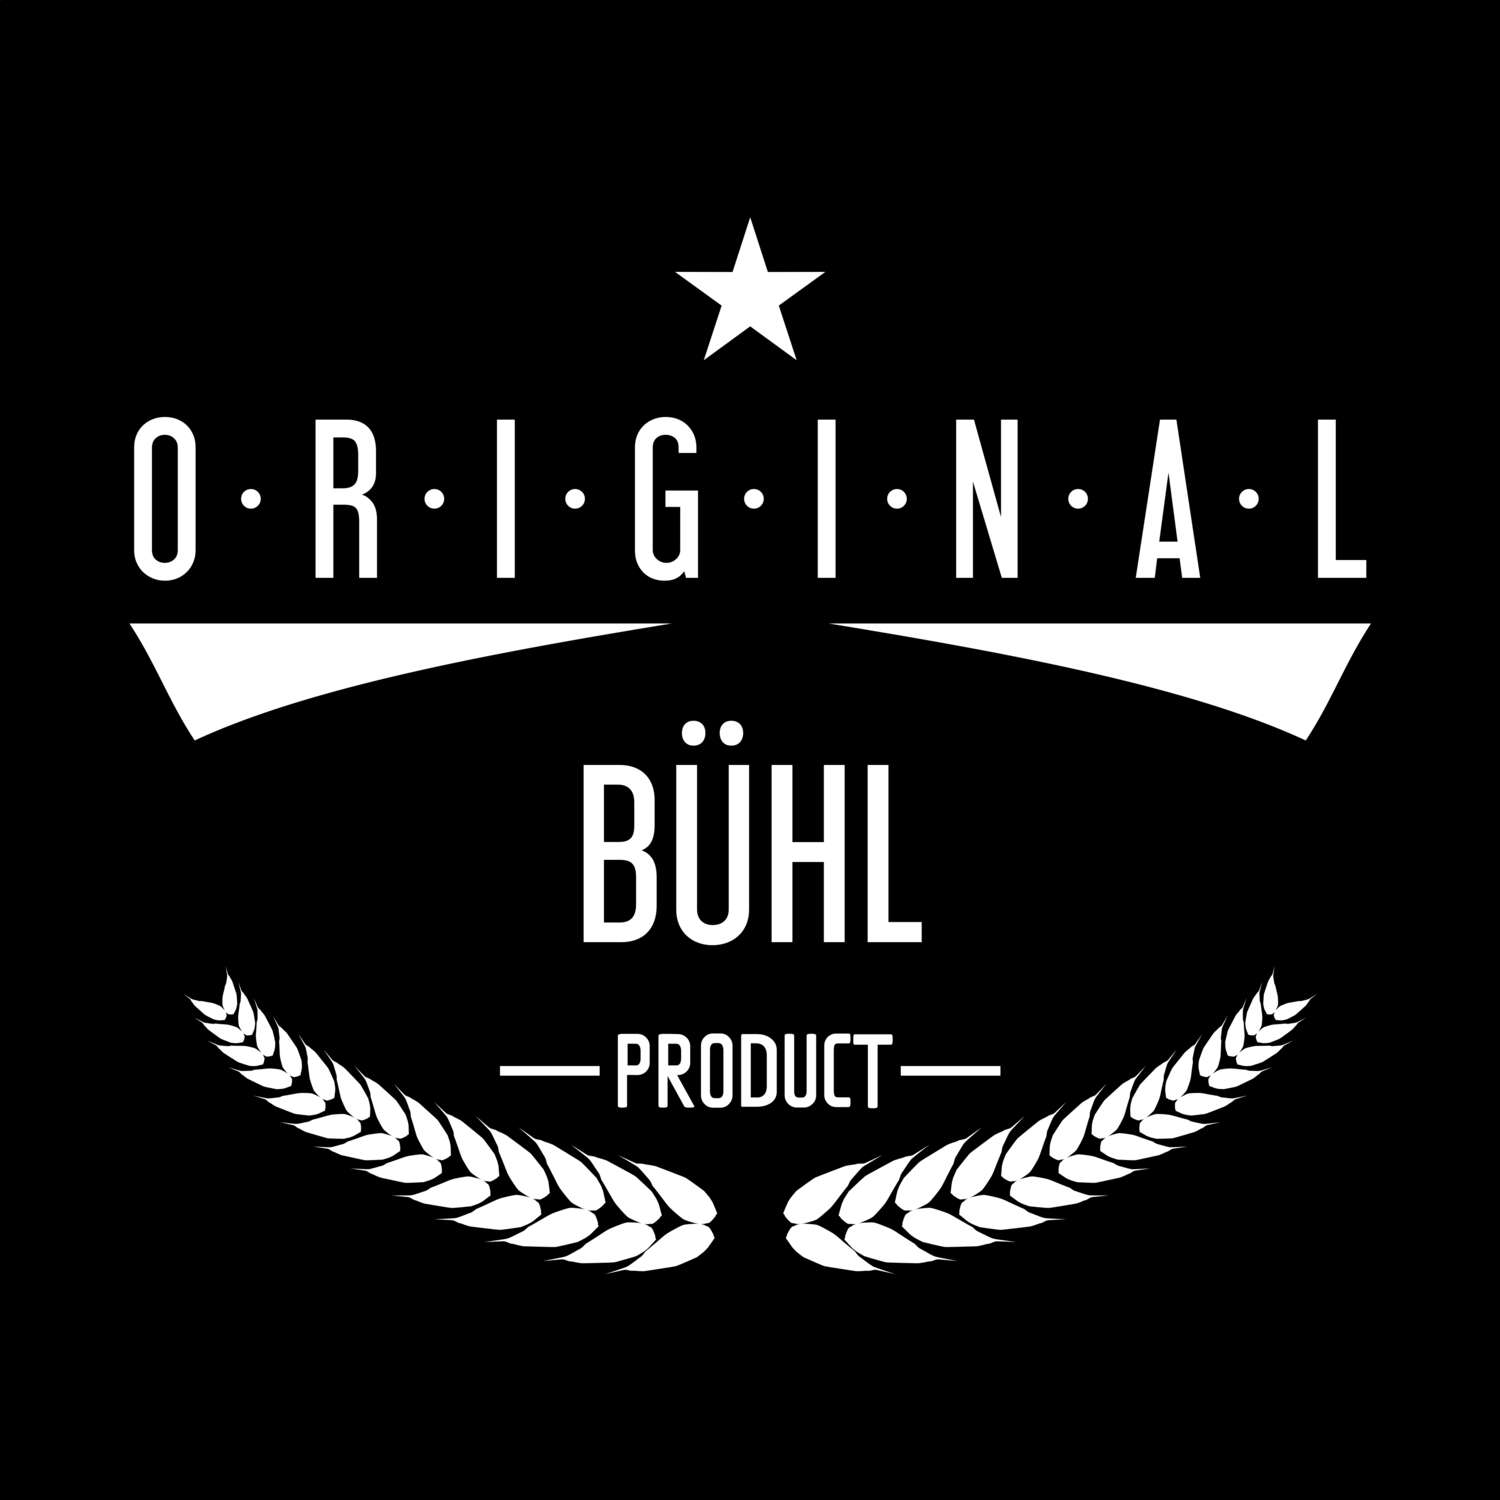 Bühl T-Shirt »Original Product«